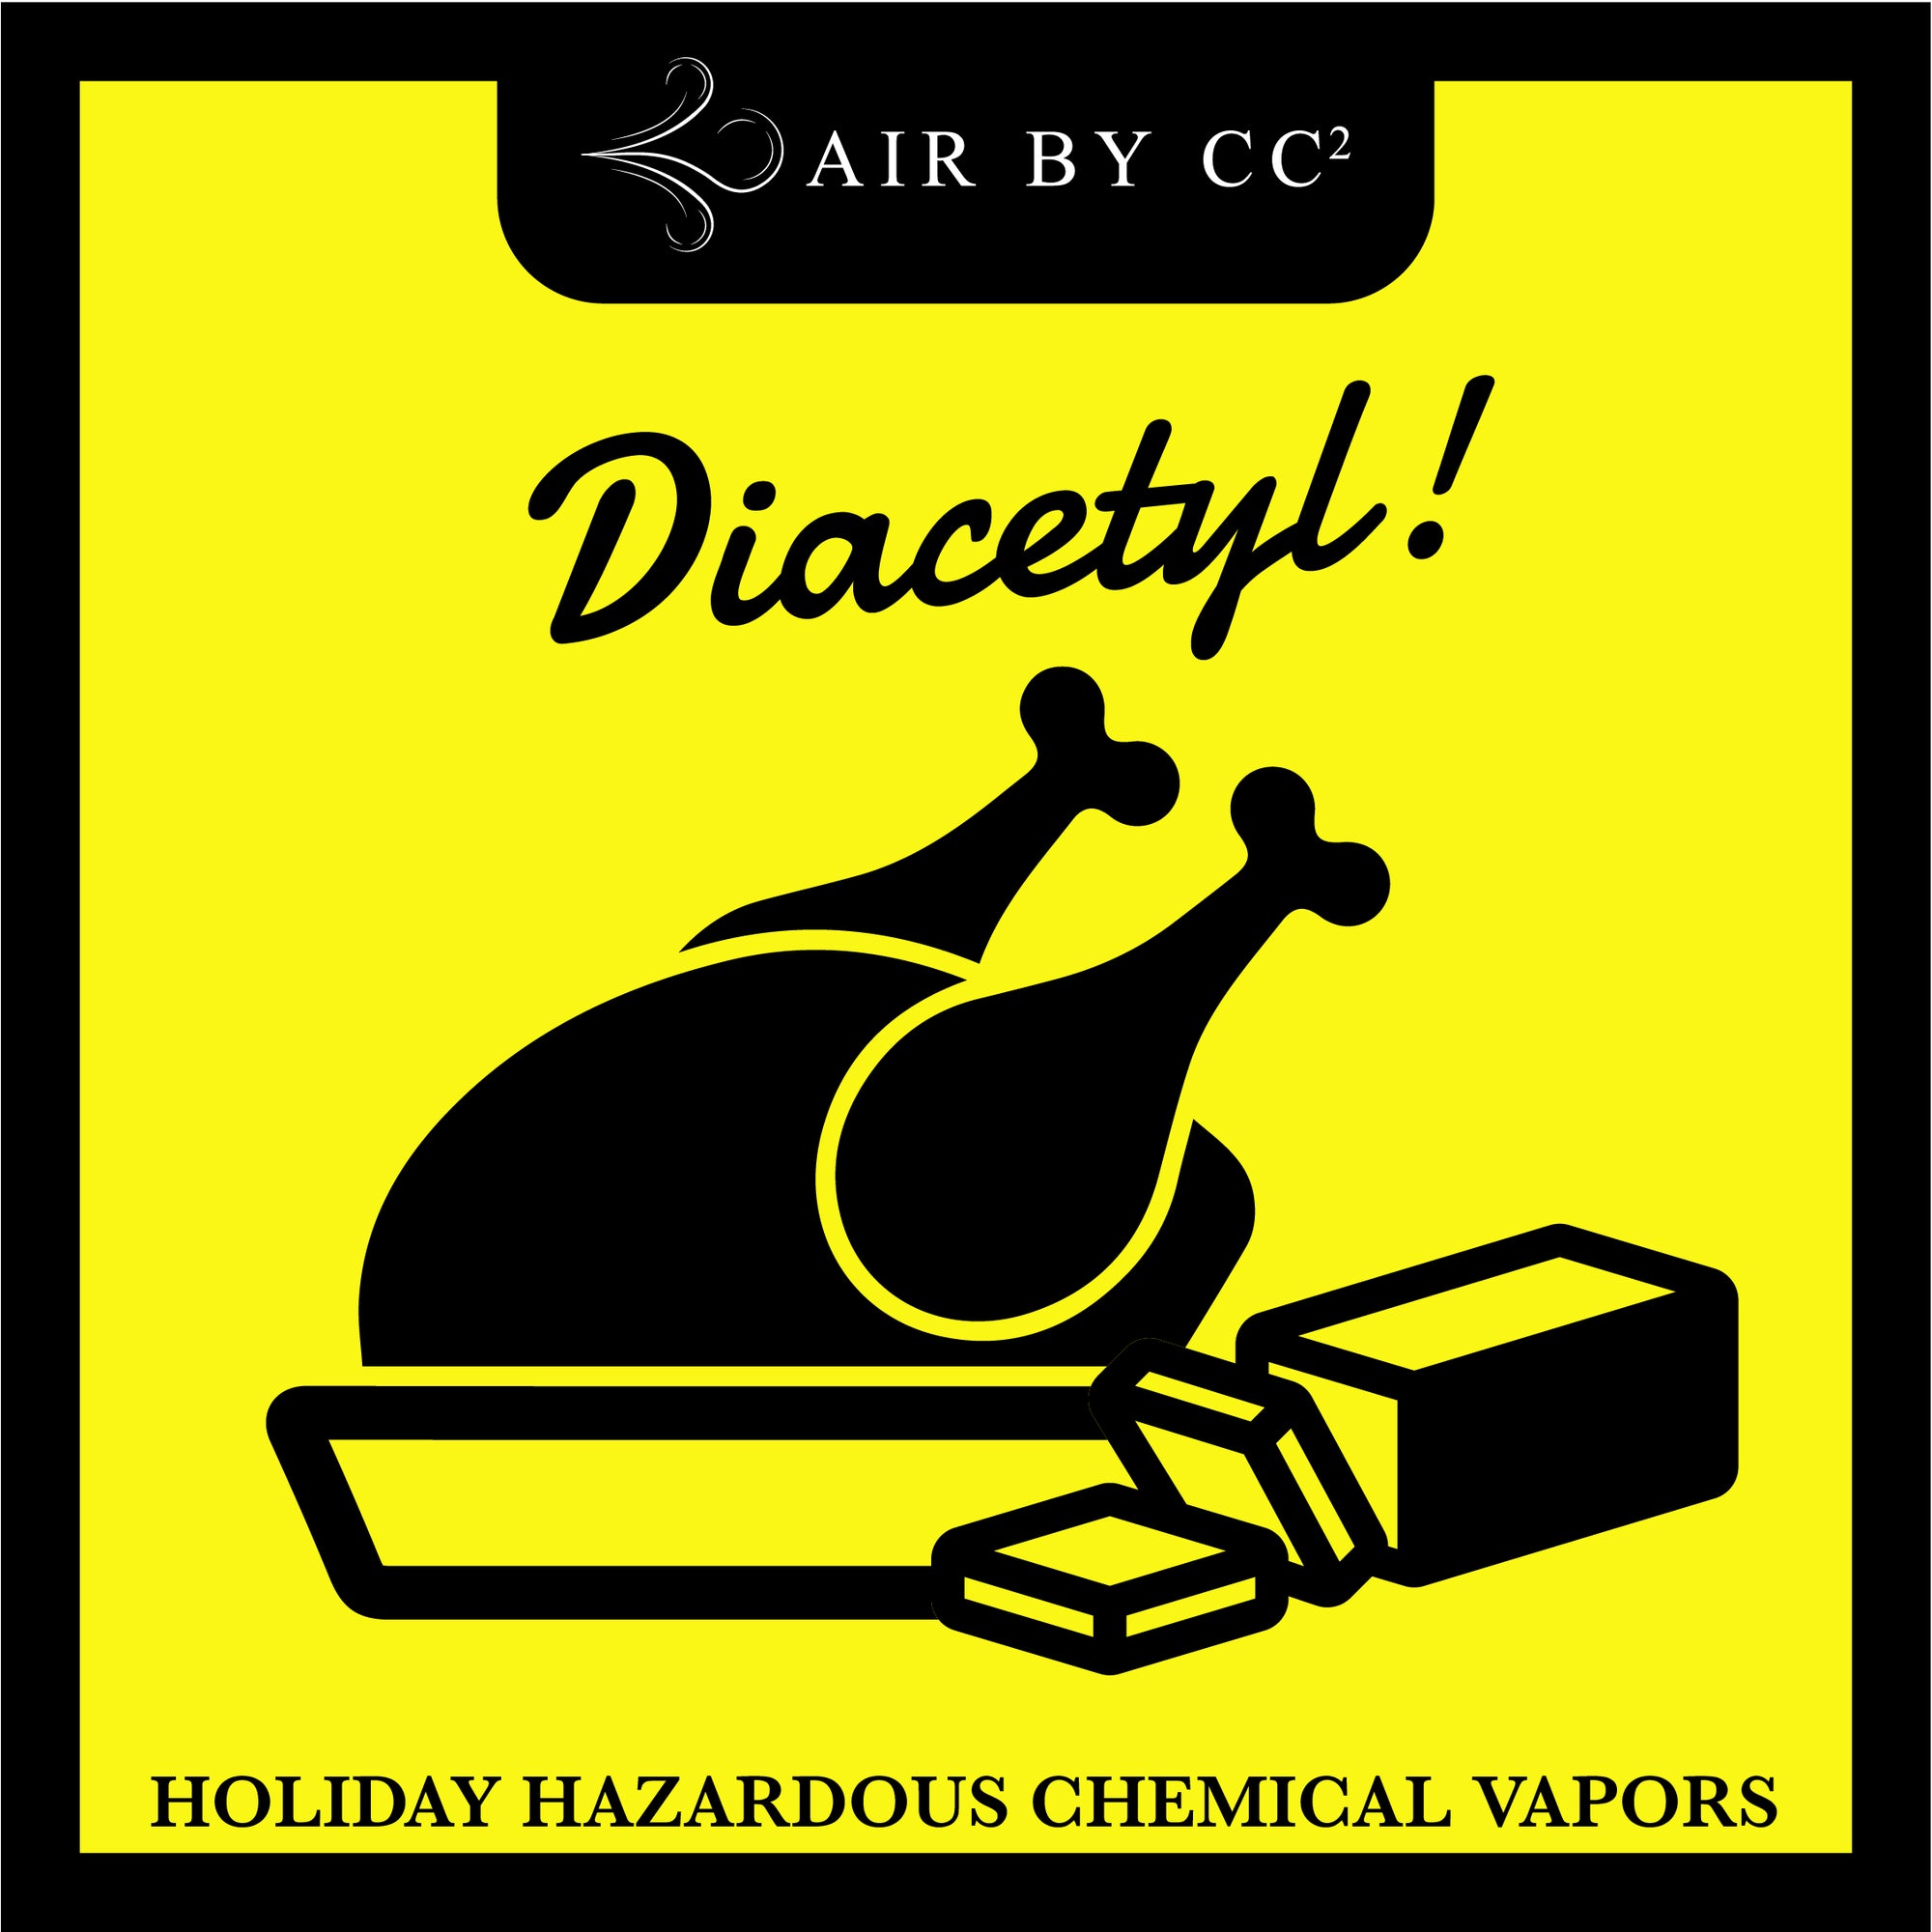 Today's Holiday Hazardous Vapor is Diacetyl